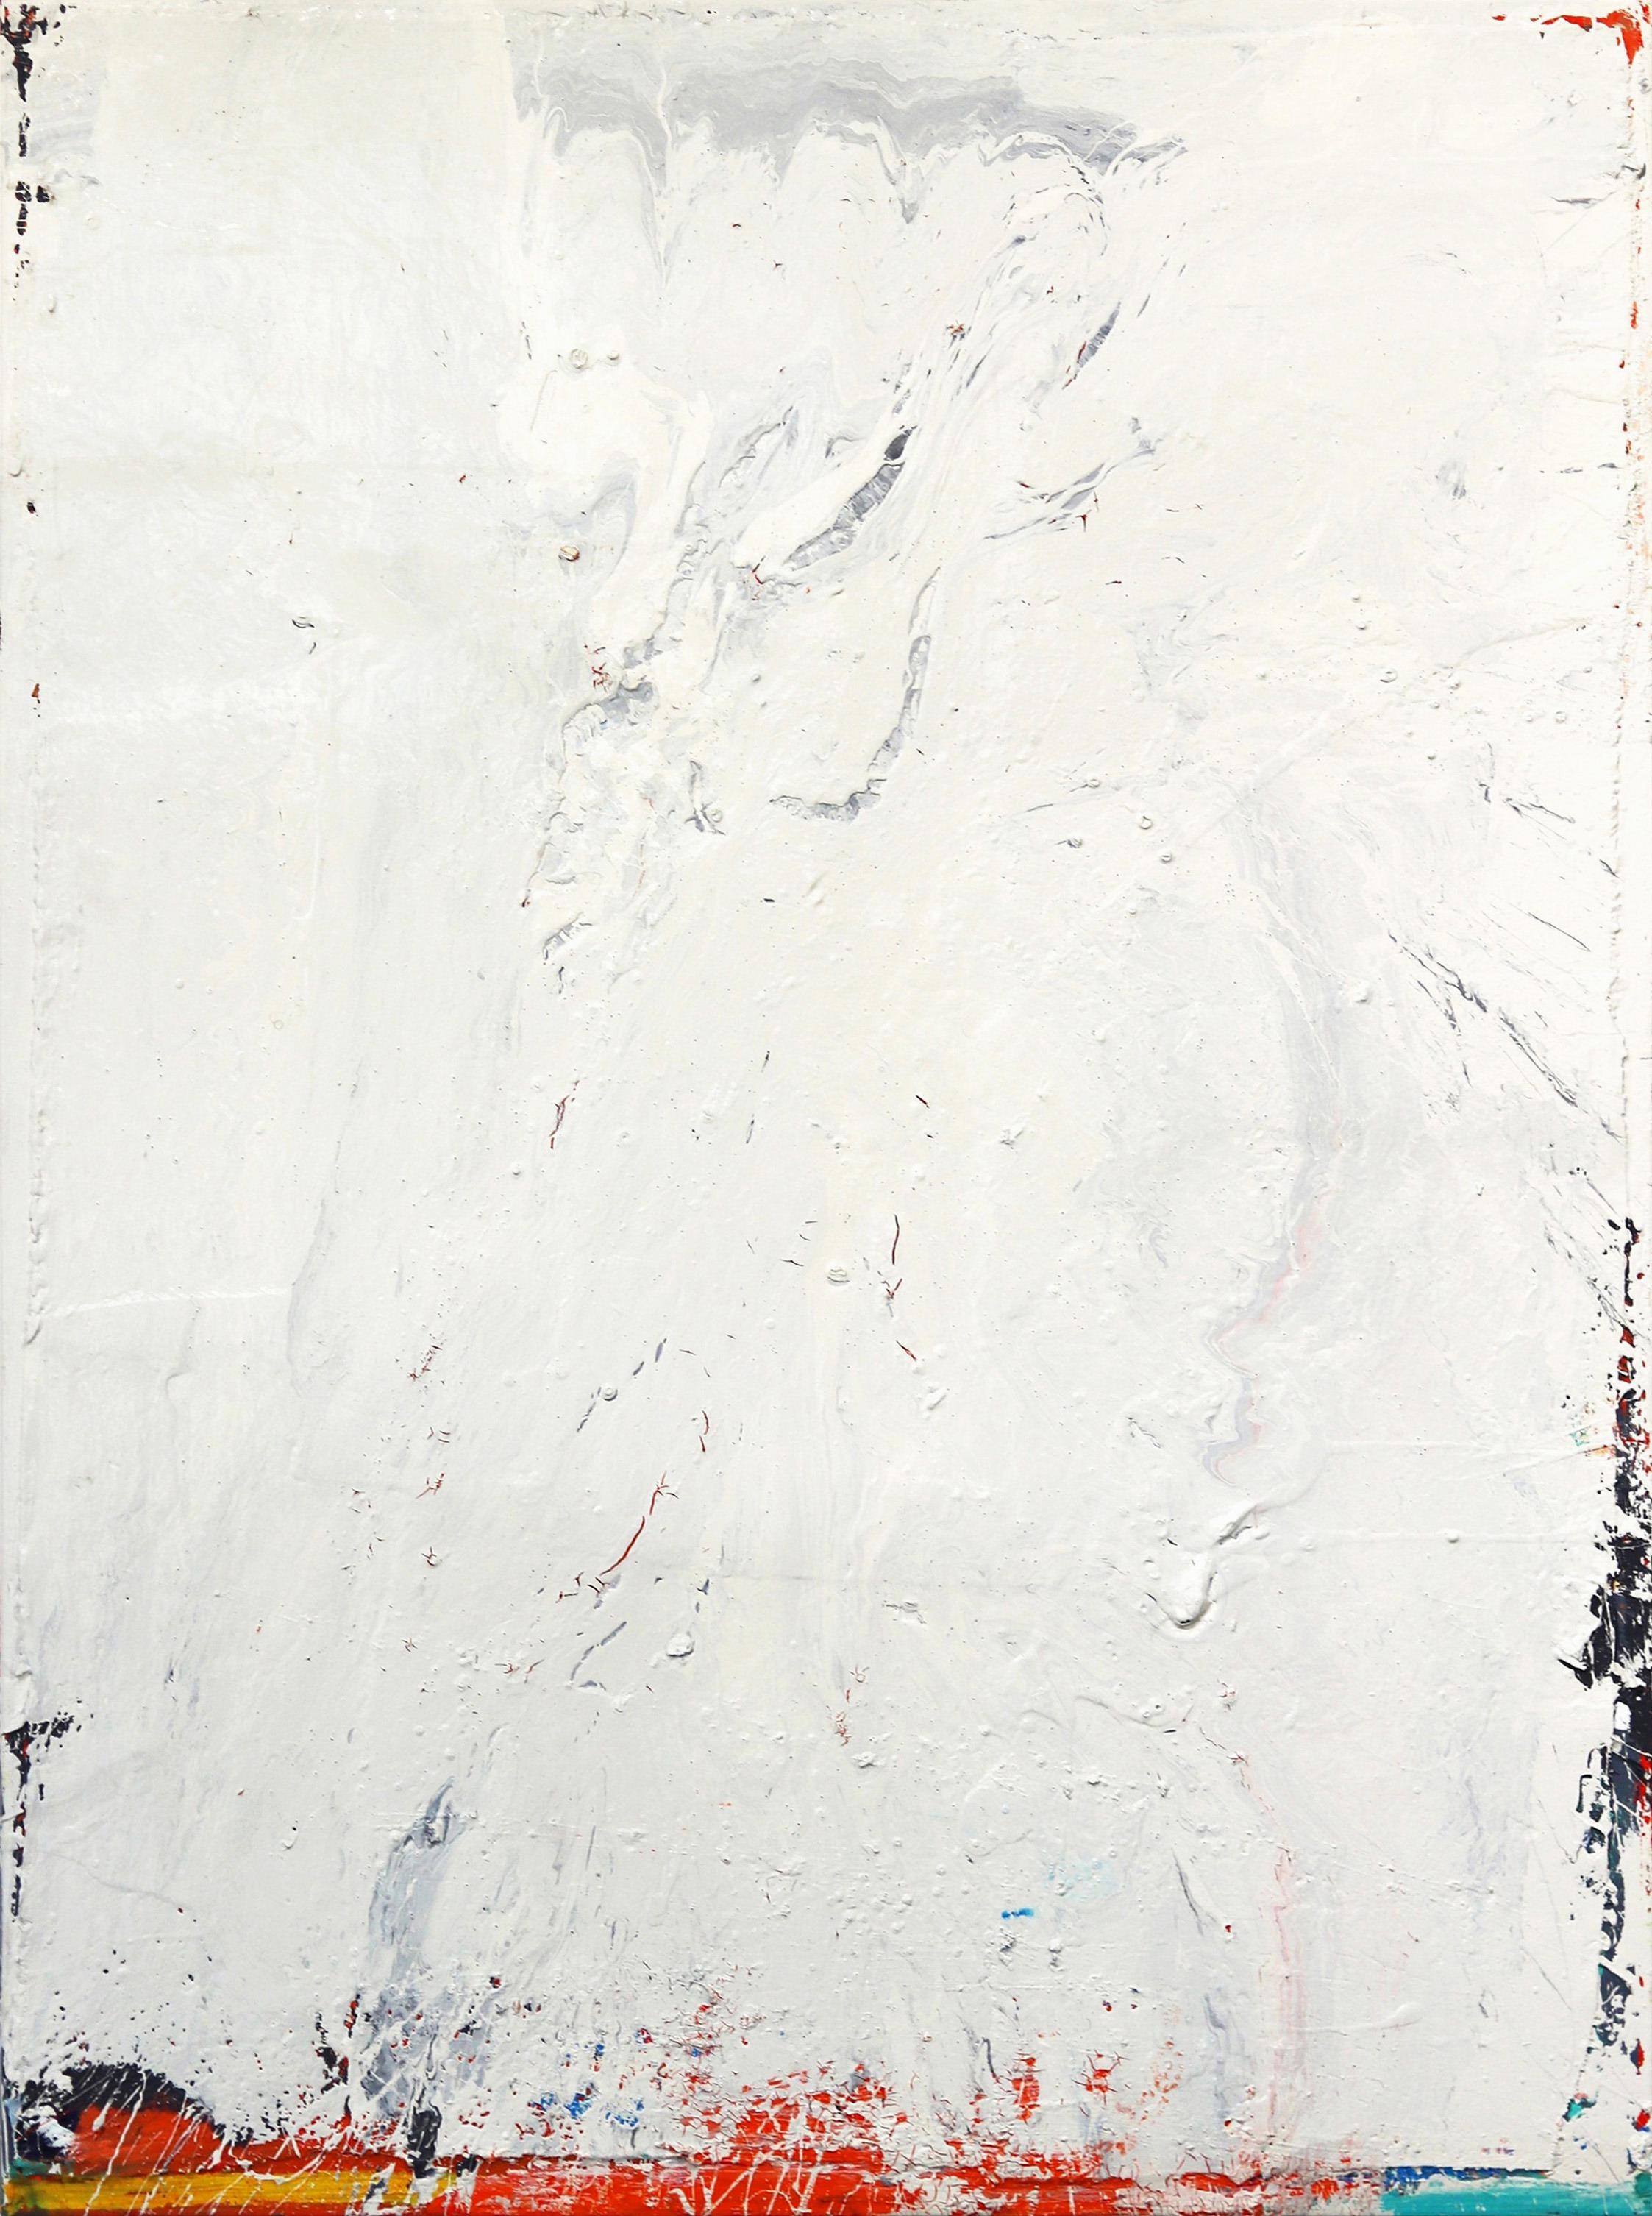 Untitled Off-White 1 - œuvre d'art abstraite et minimaliste texturée sur toile - Mixed Media Art de Kodjovi Olympio